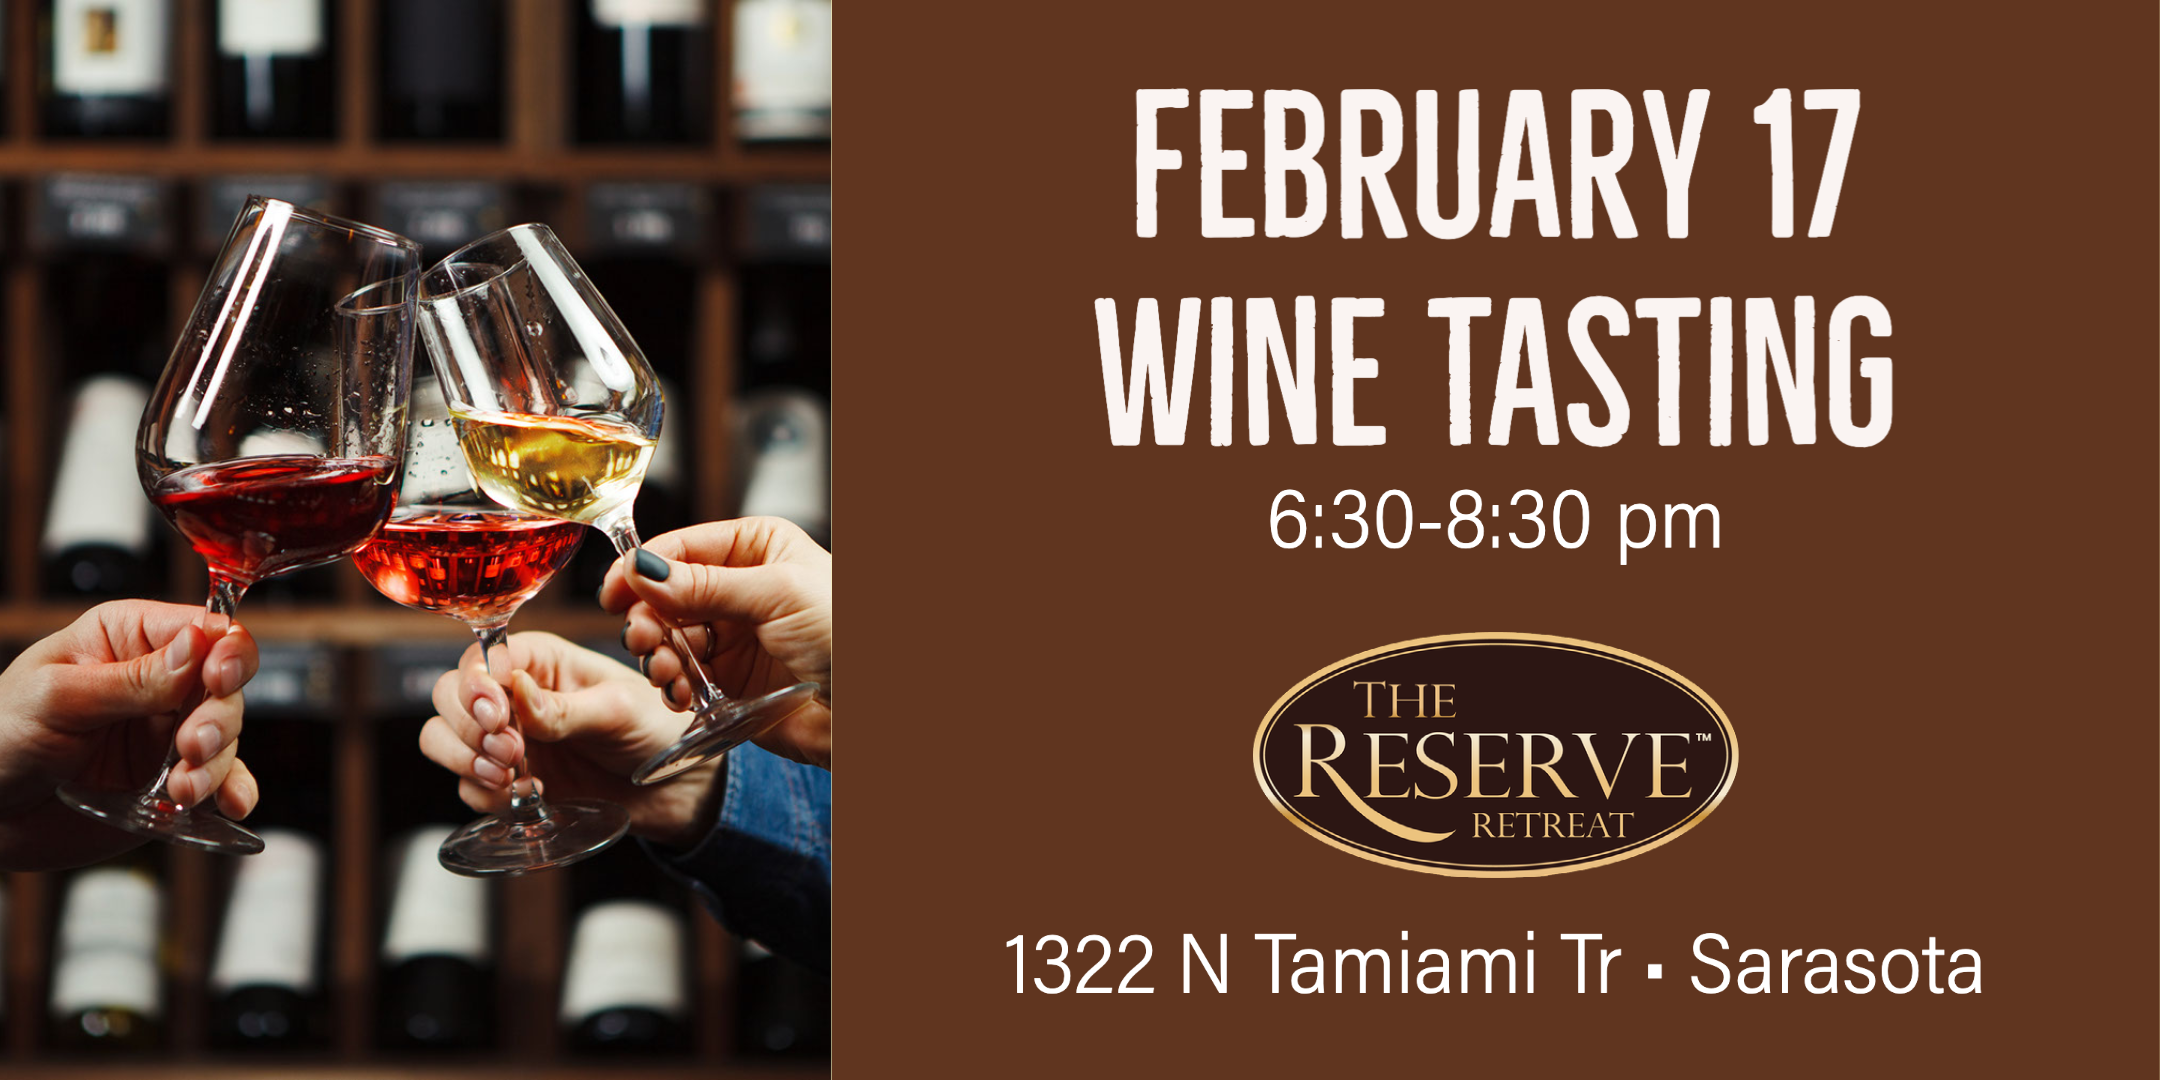 Feb 17 wine tasting at The Reserve Retreat